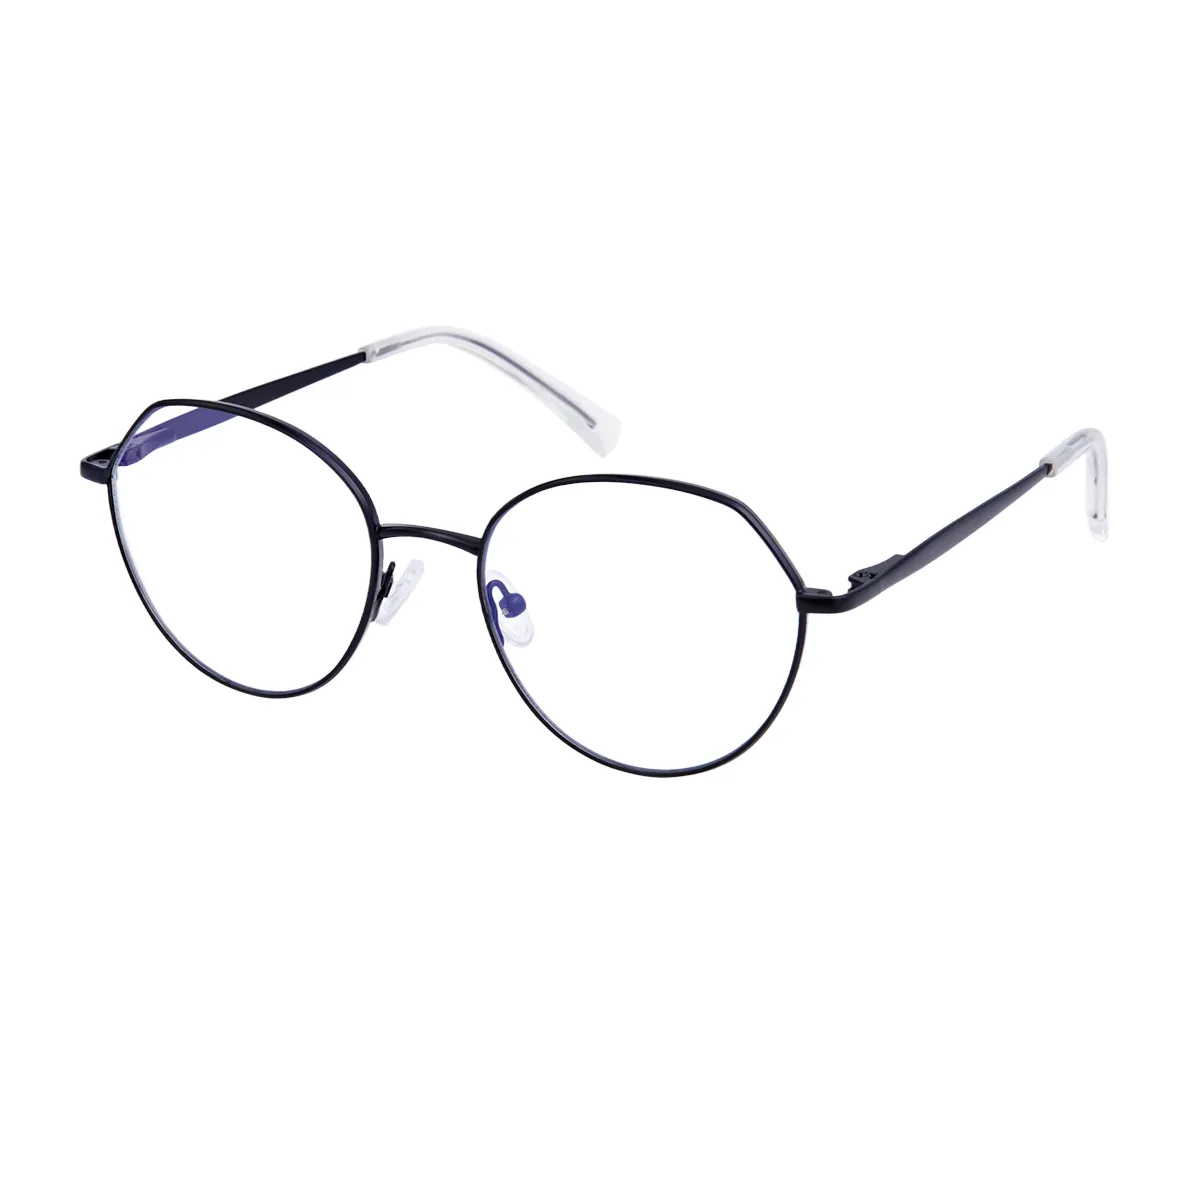 Gwendolyn - Geometric Black Glasses for Men & Women